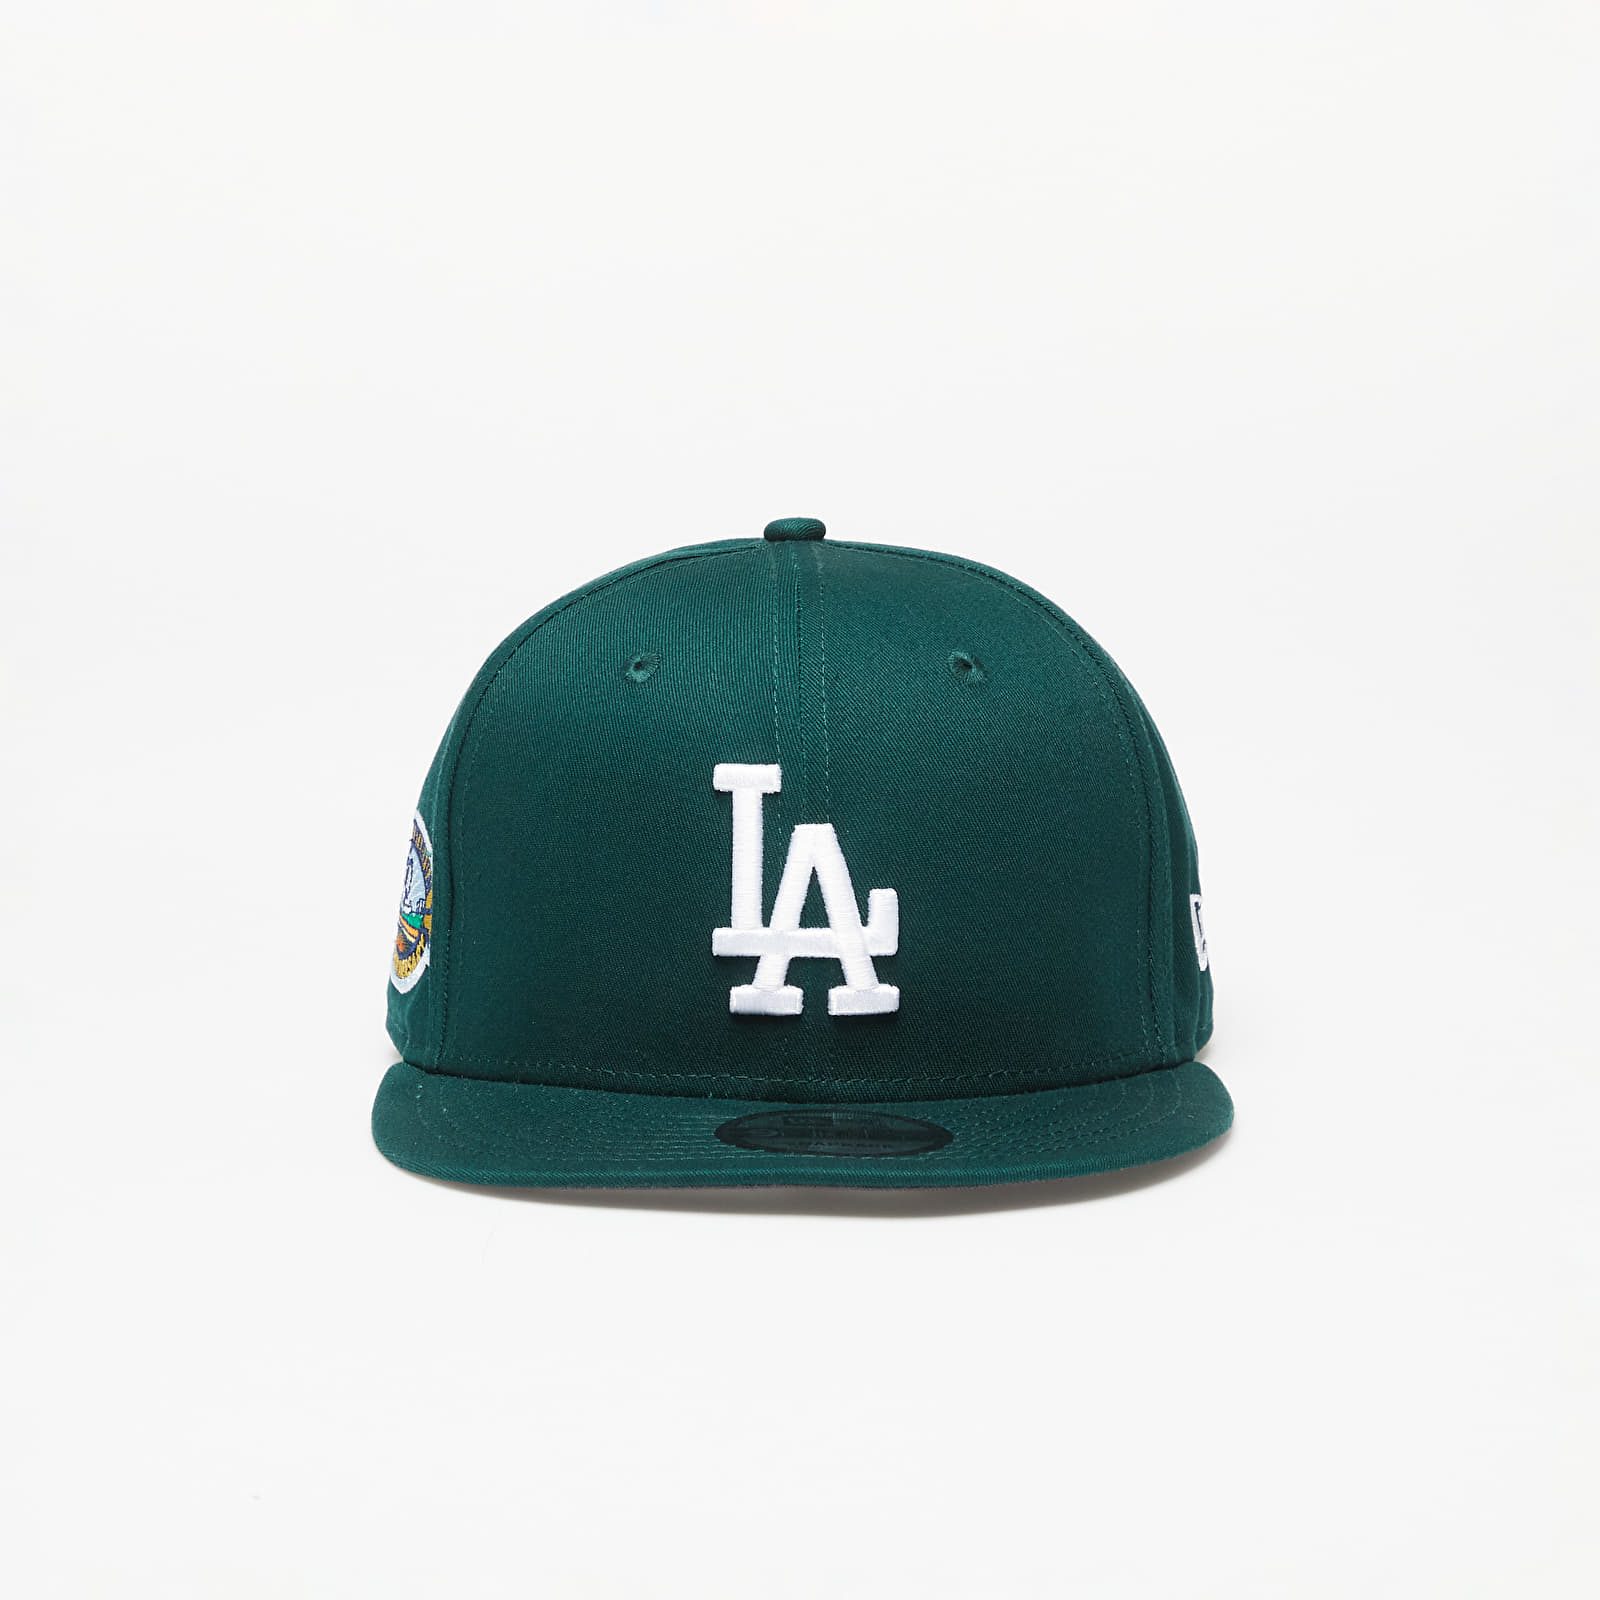 Caps New Era Los Angeles Dodgers New Traditions 9FIFTY Snapback Cap Dark Green/ Graphite/Dark Graphite